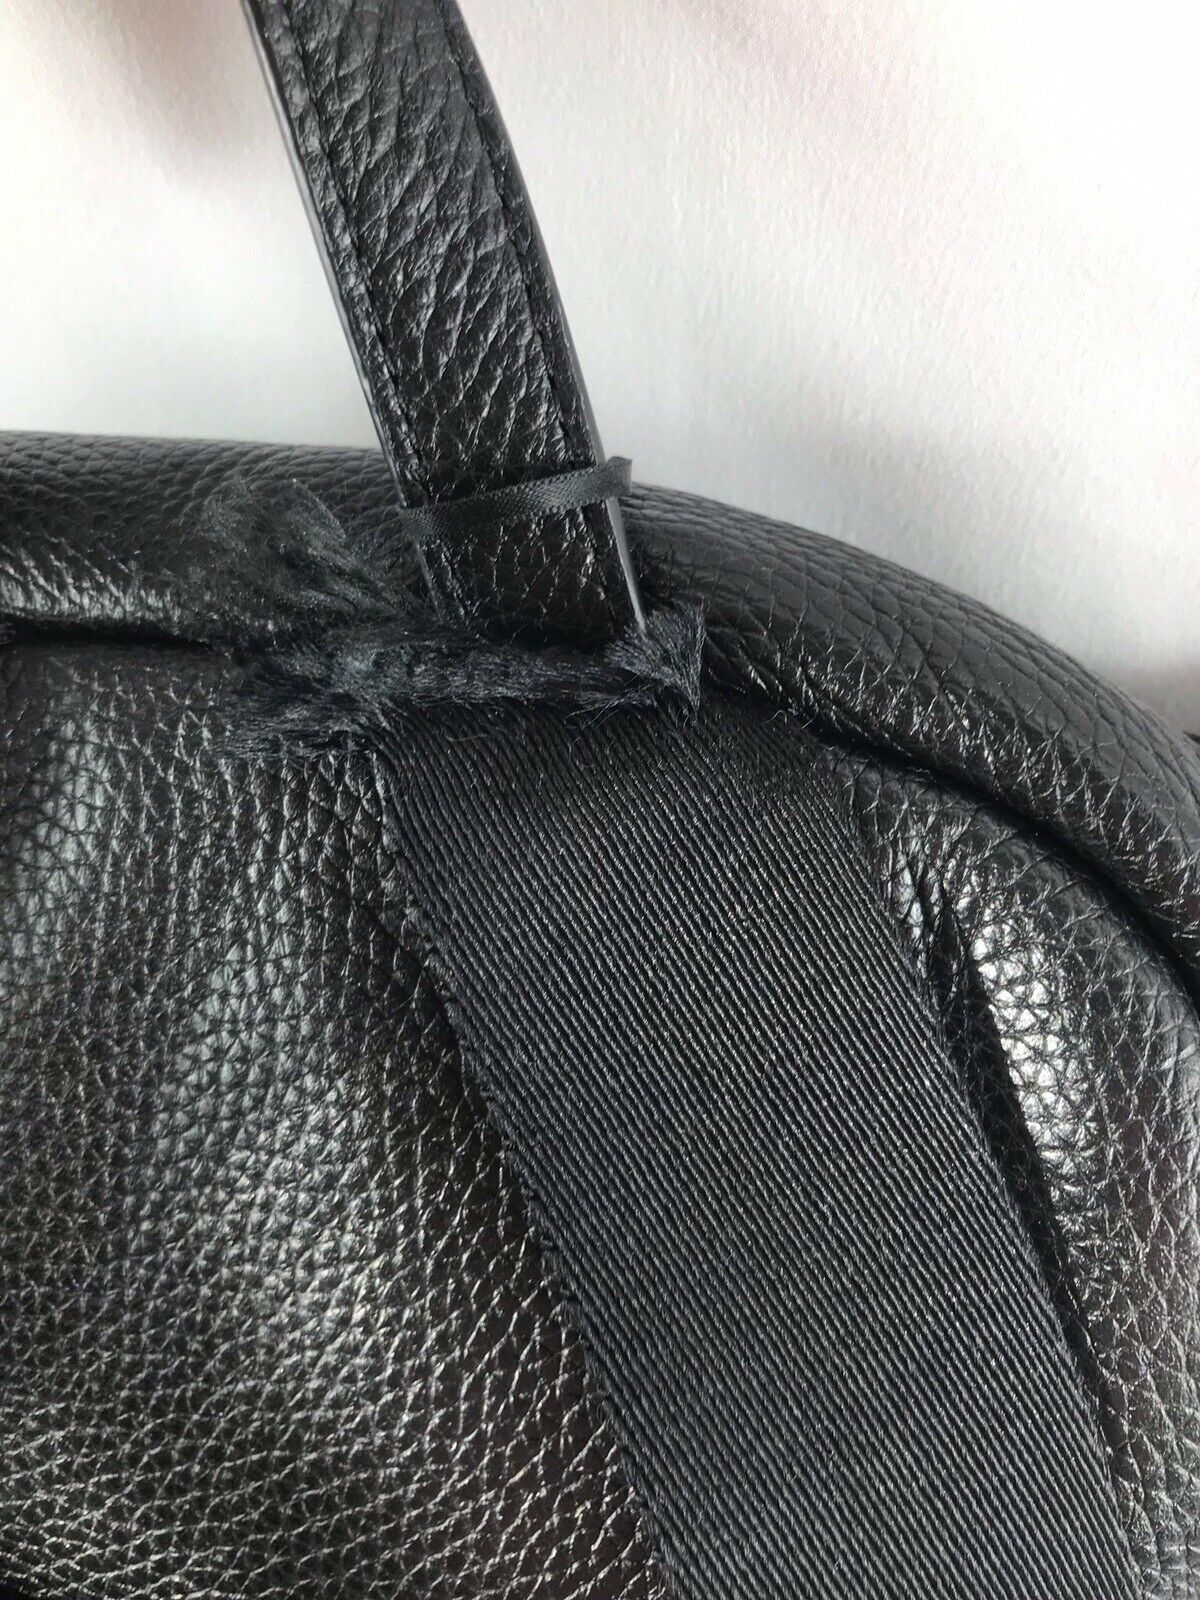 DKNY Black Gold Leather Backpack – ReturnStyle